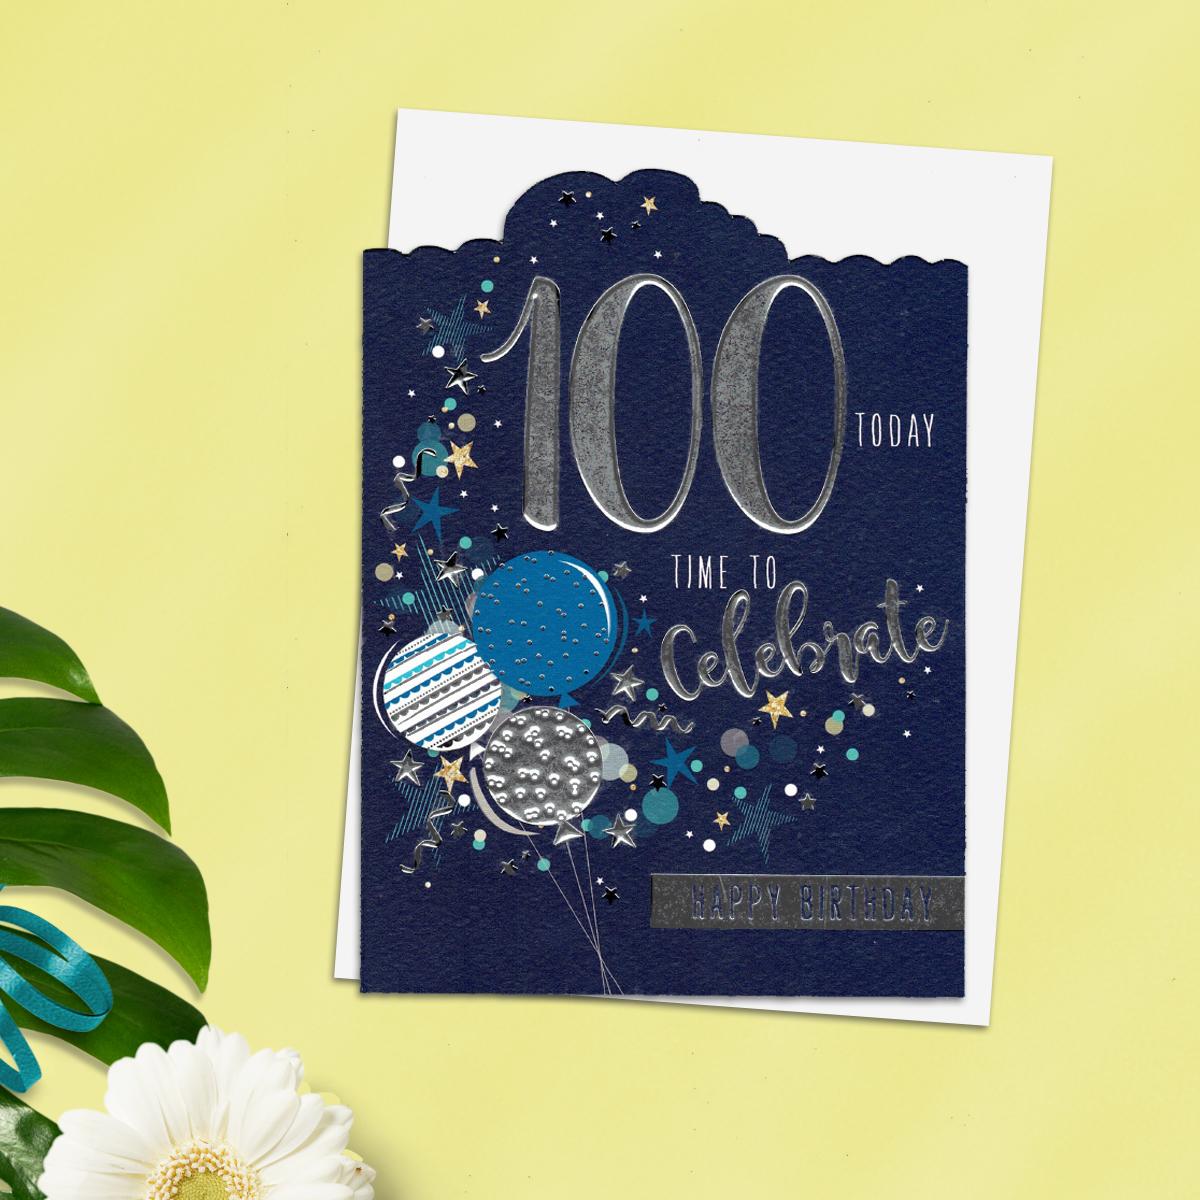 100th Time To Celebrate Birthday Design Alongside Its White Envelope